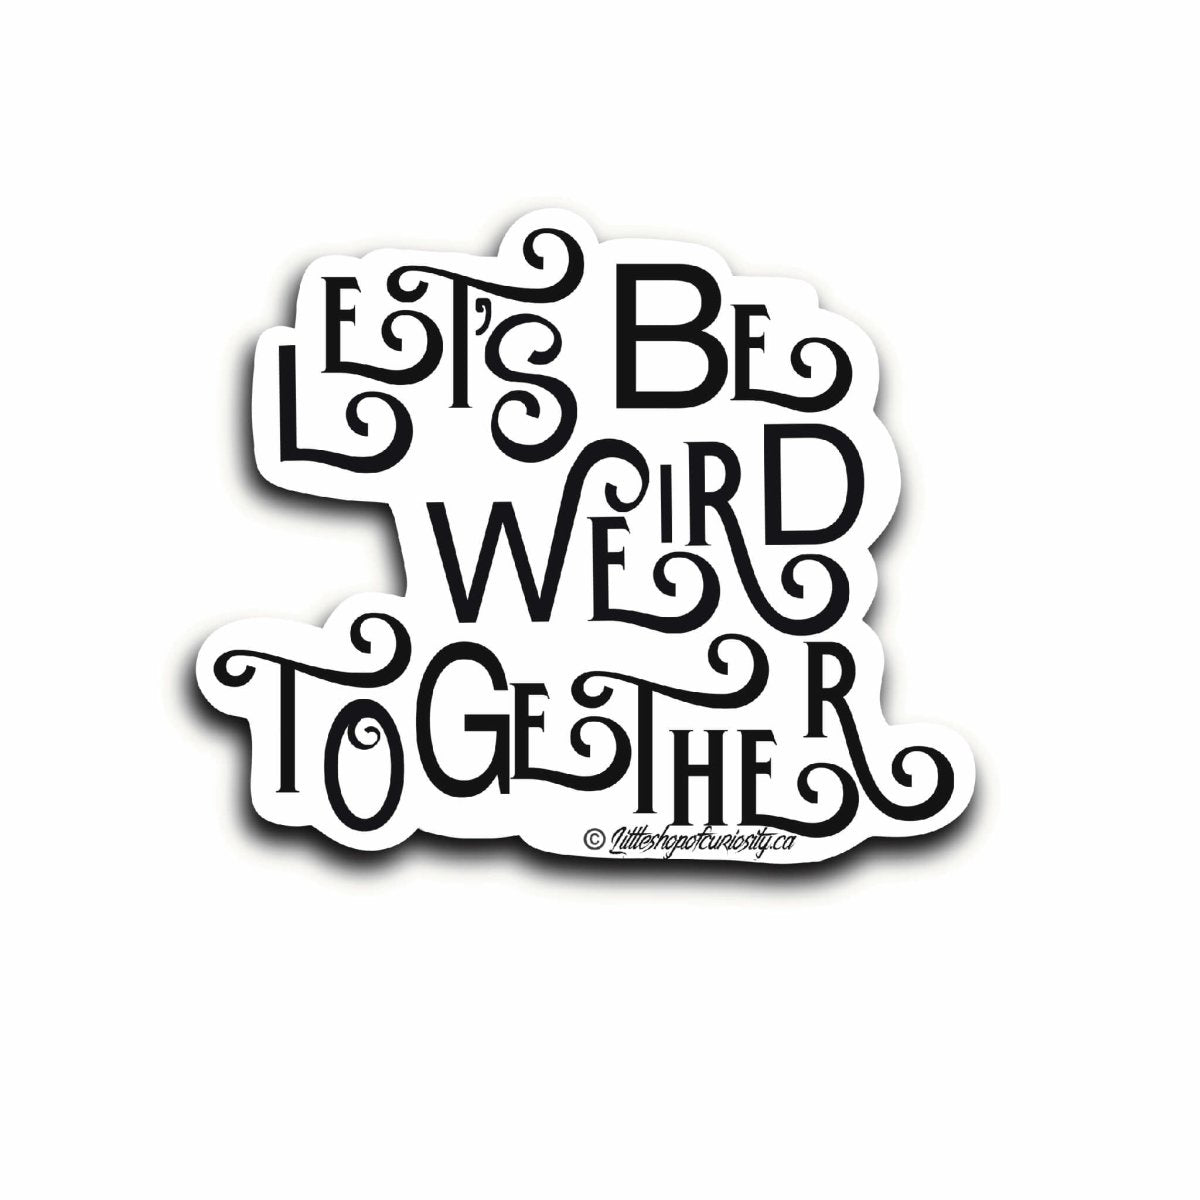 Let's Be Weird Together Sticker - Black & White Sticker - Little Shop of Curiosity